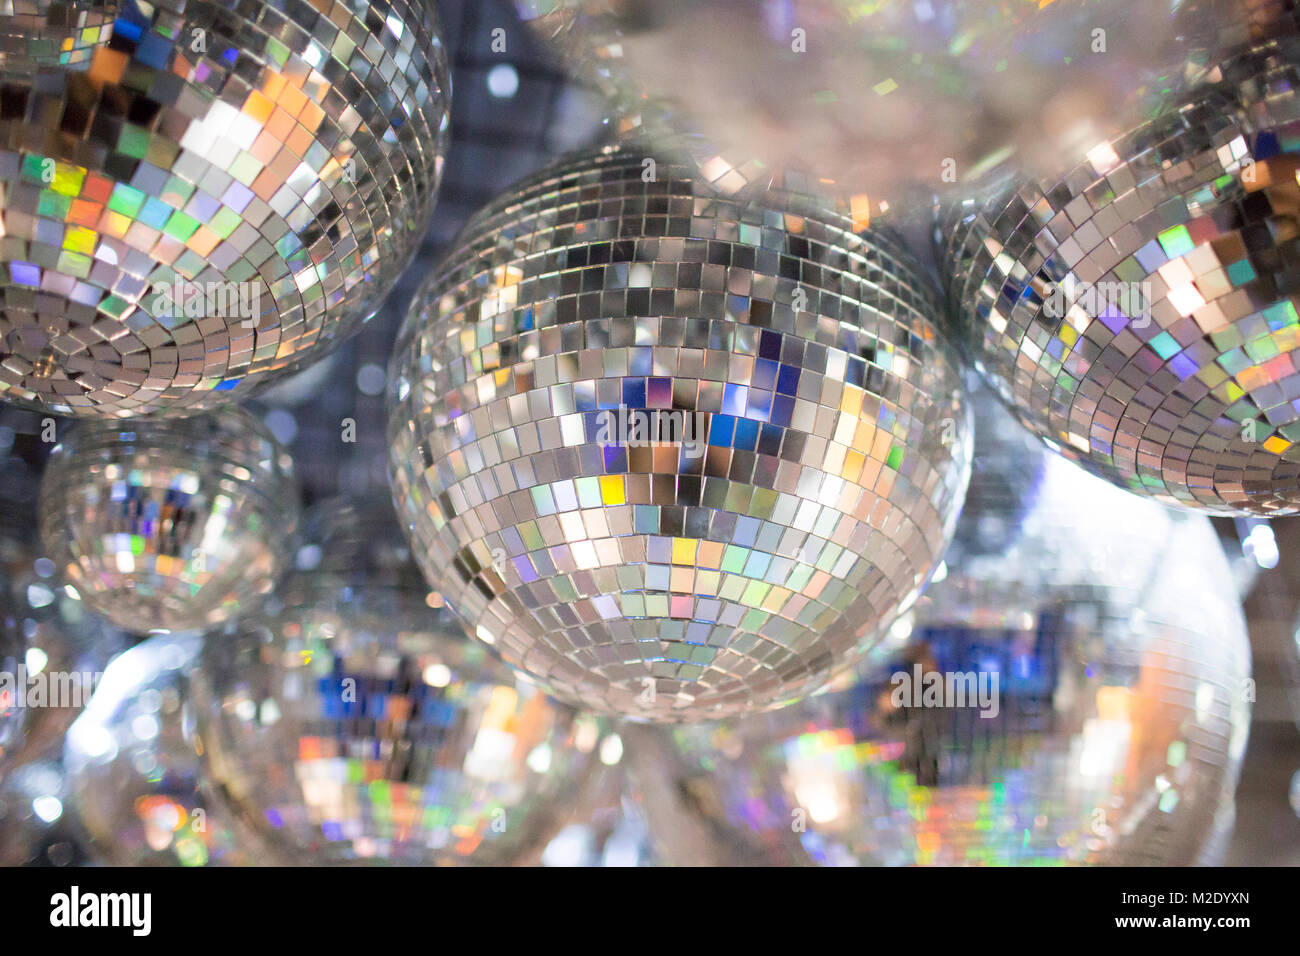 Disco balls on ceiling Stock Photo